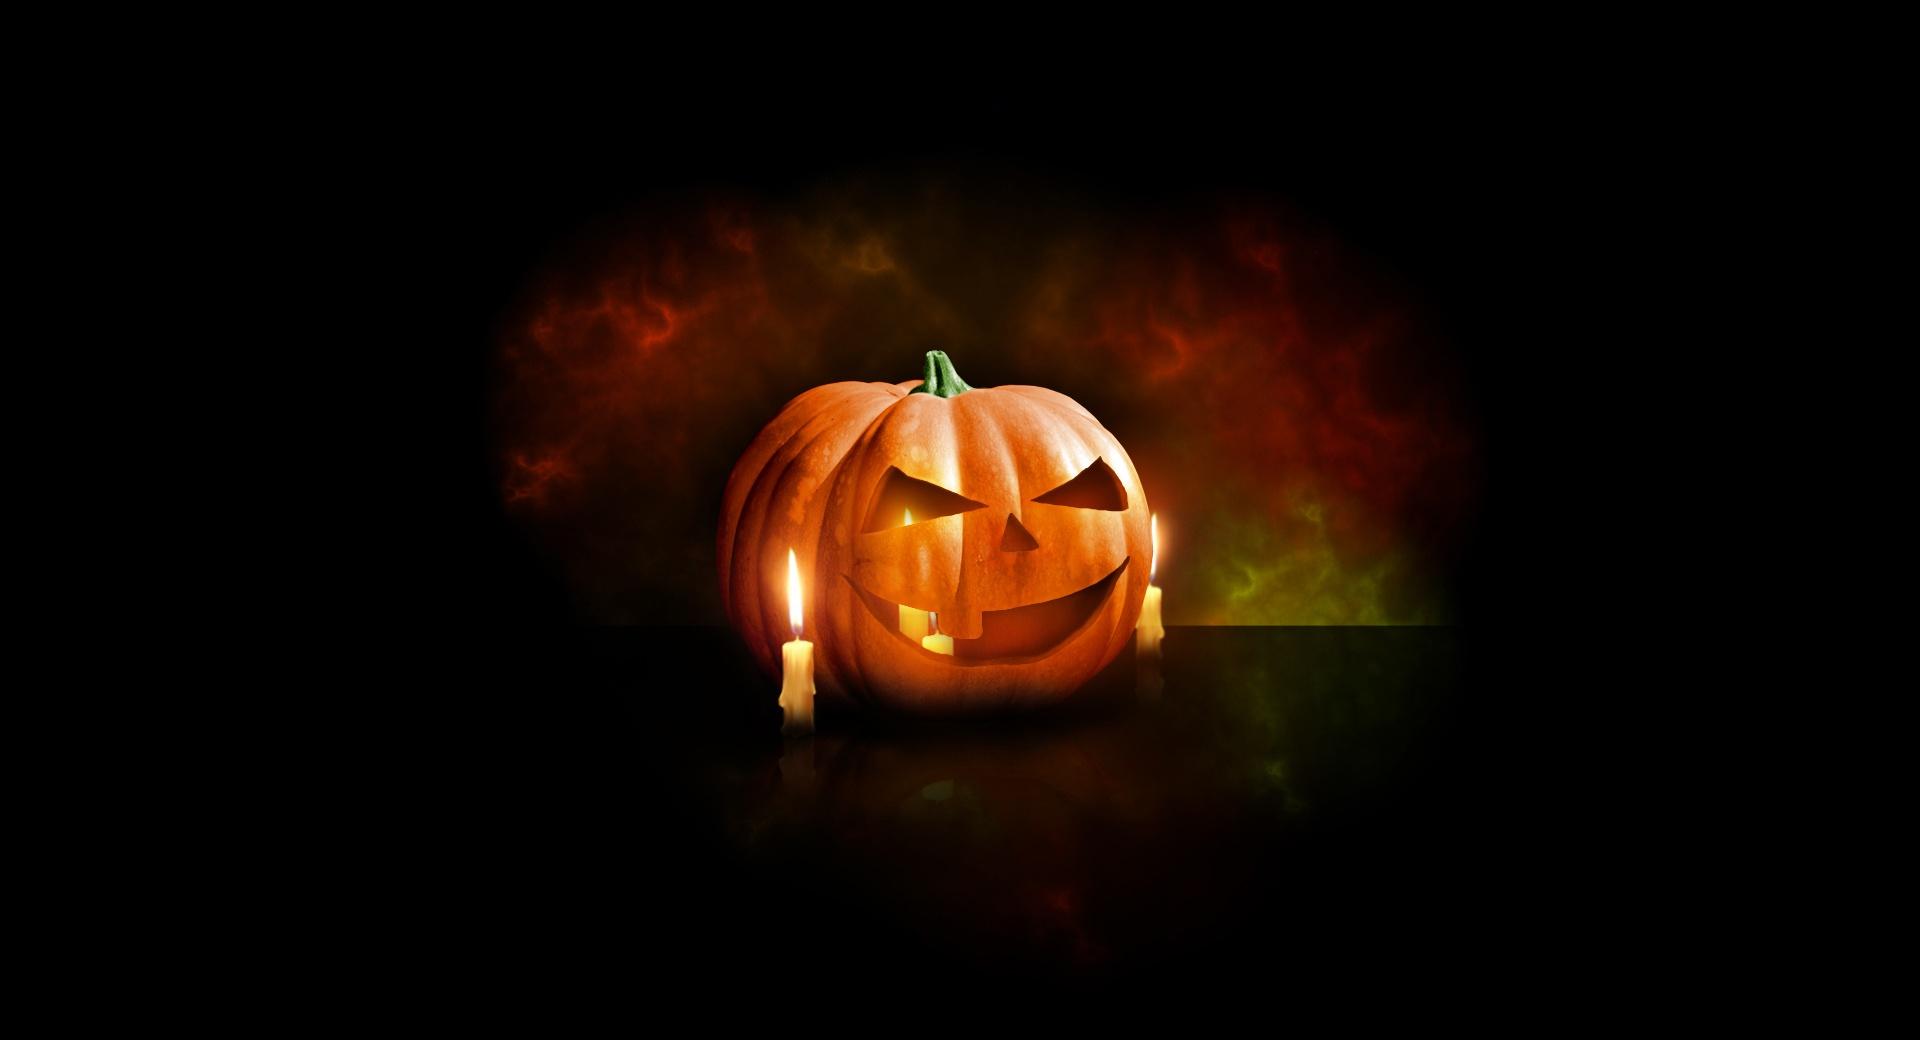 Halloween Pumpkin at 1024 x 1024 iPad size wallpapers HD quality